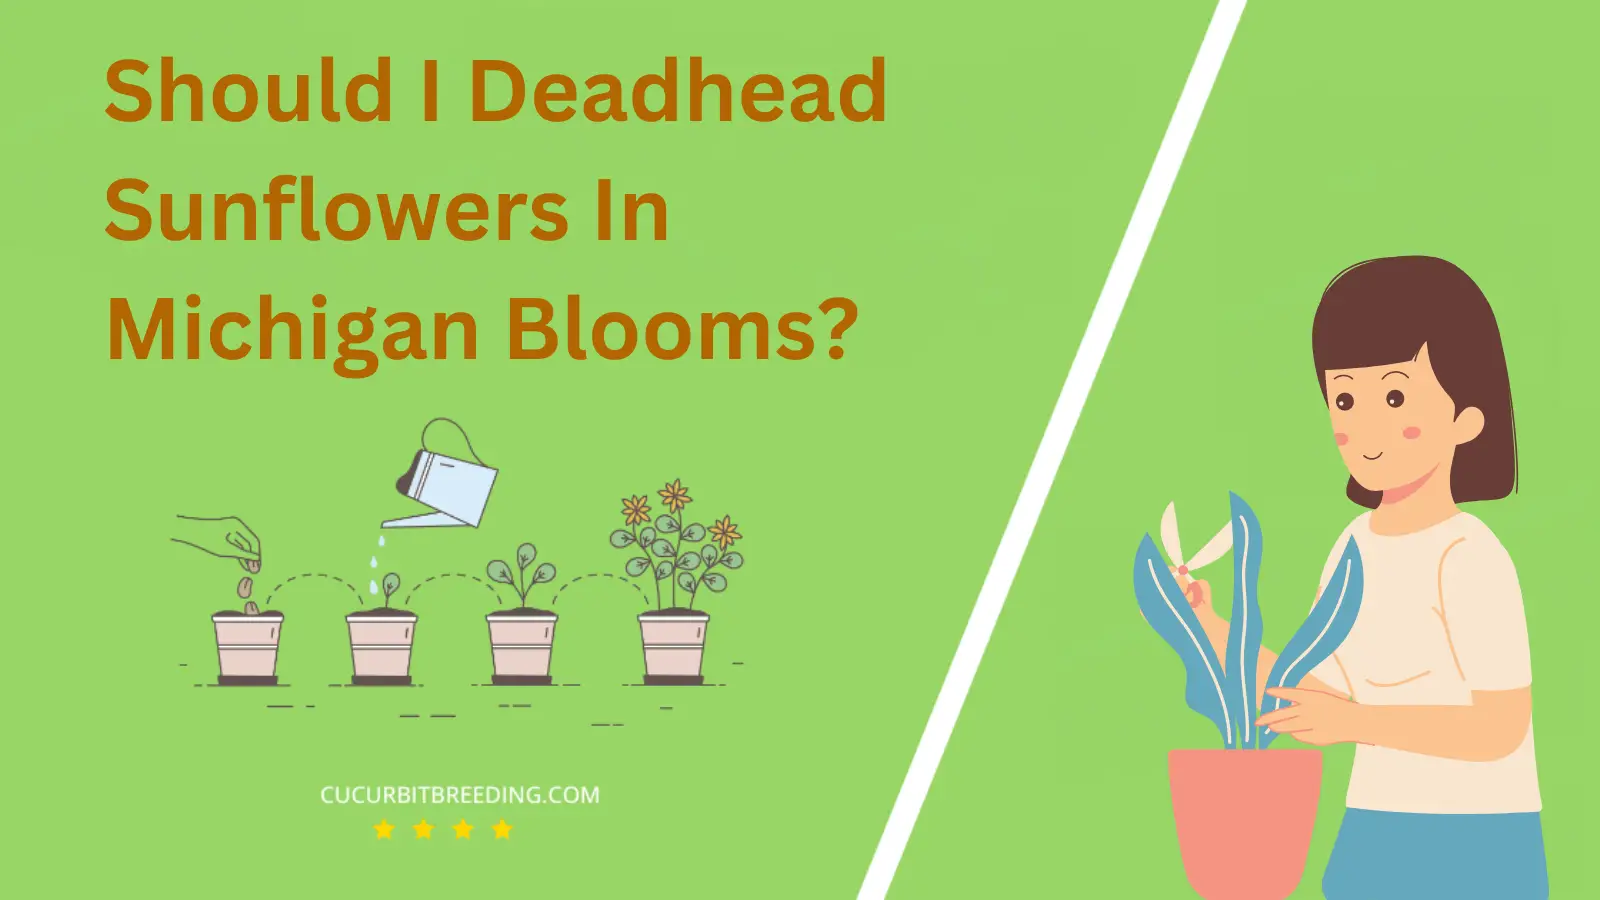 Should I Deadhead Sunflowers In Michigan Blooms?